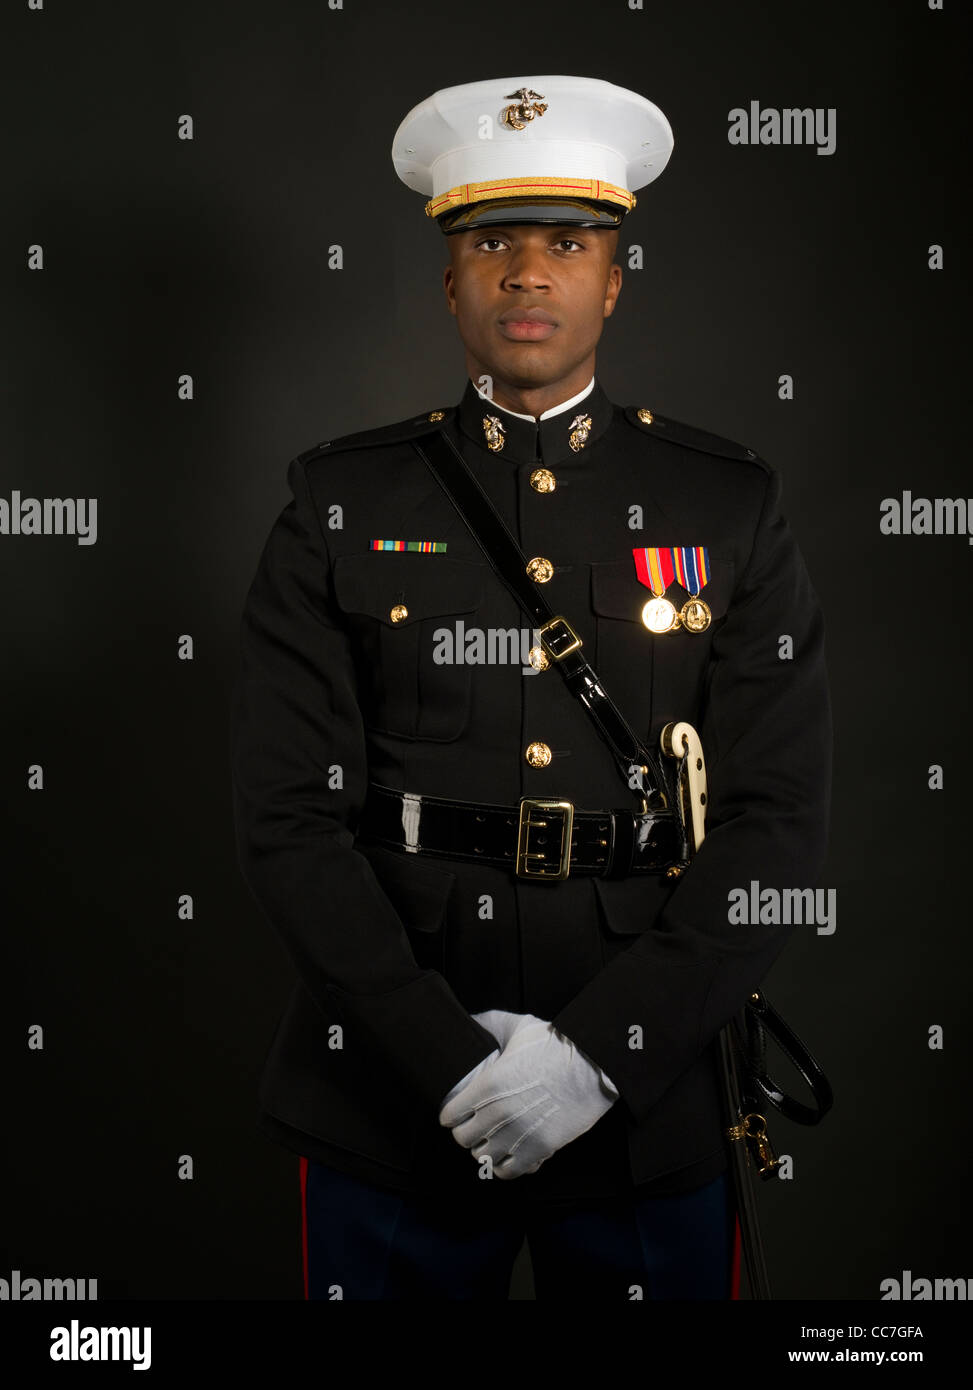 Marine Corps Officer Uniform 110